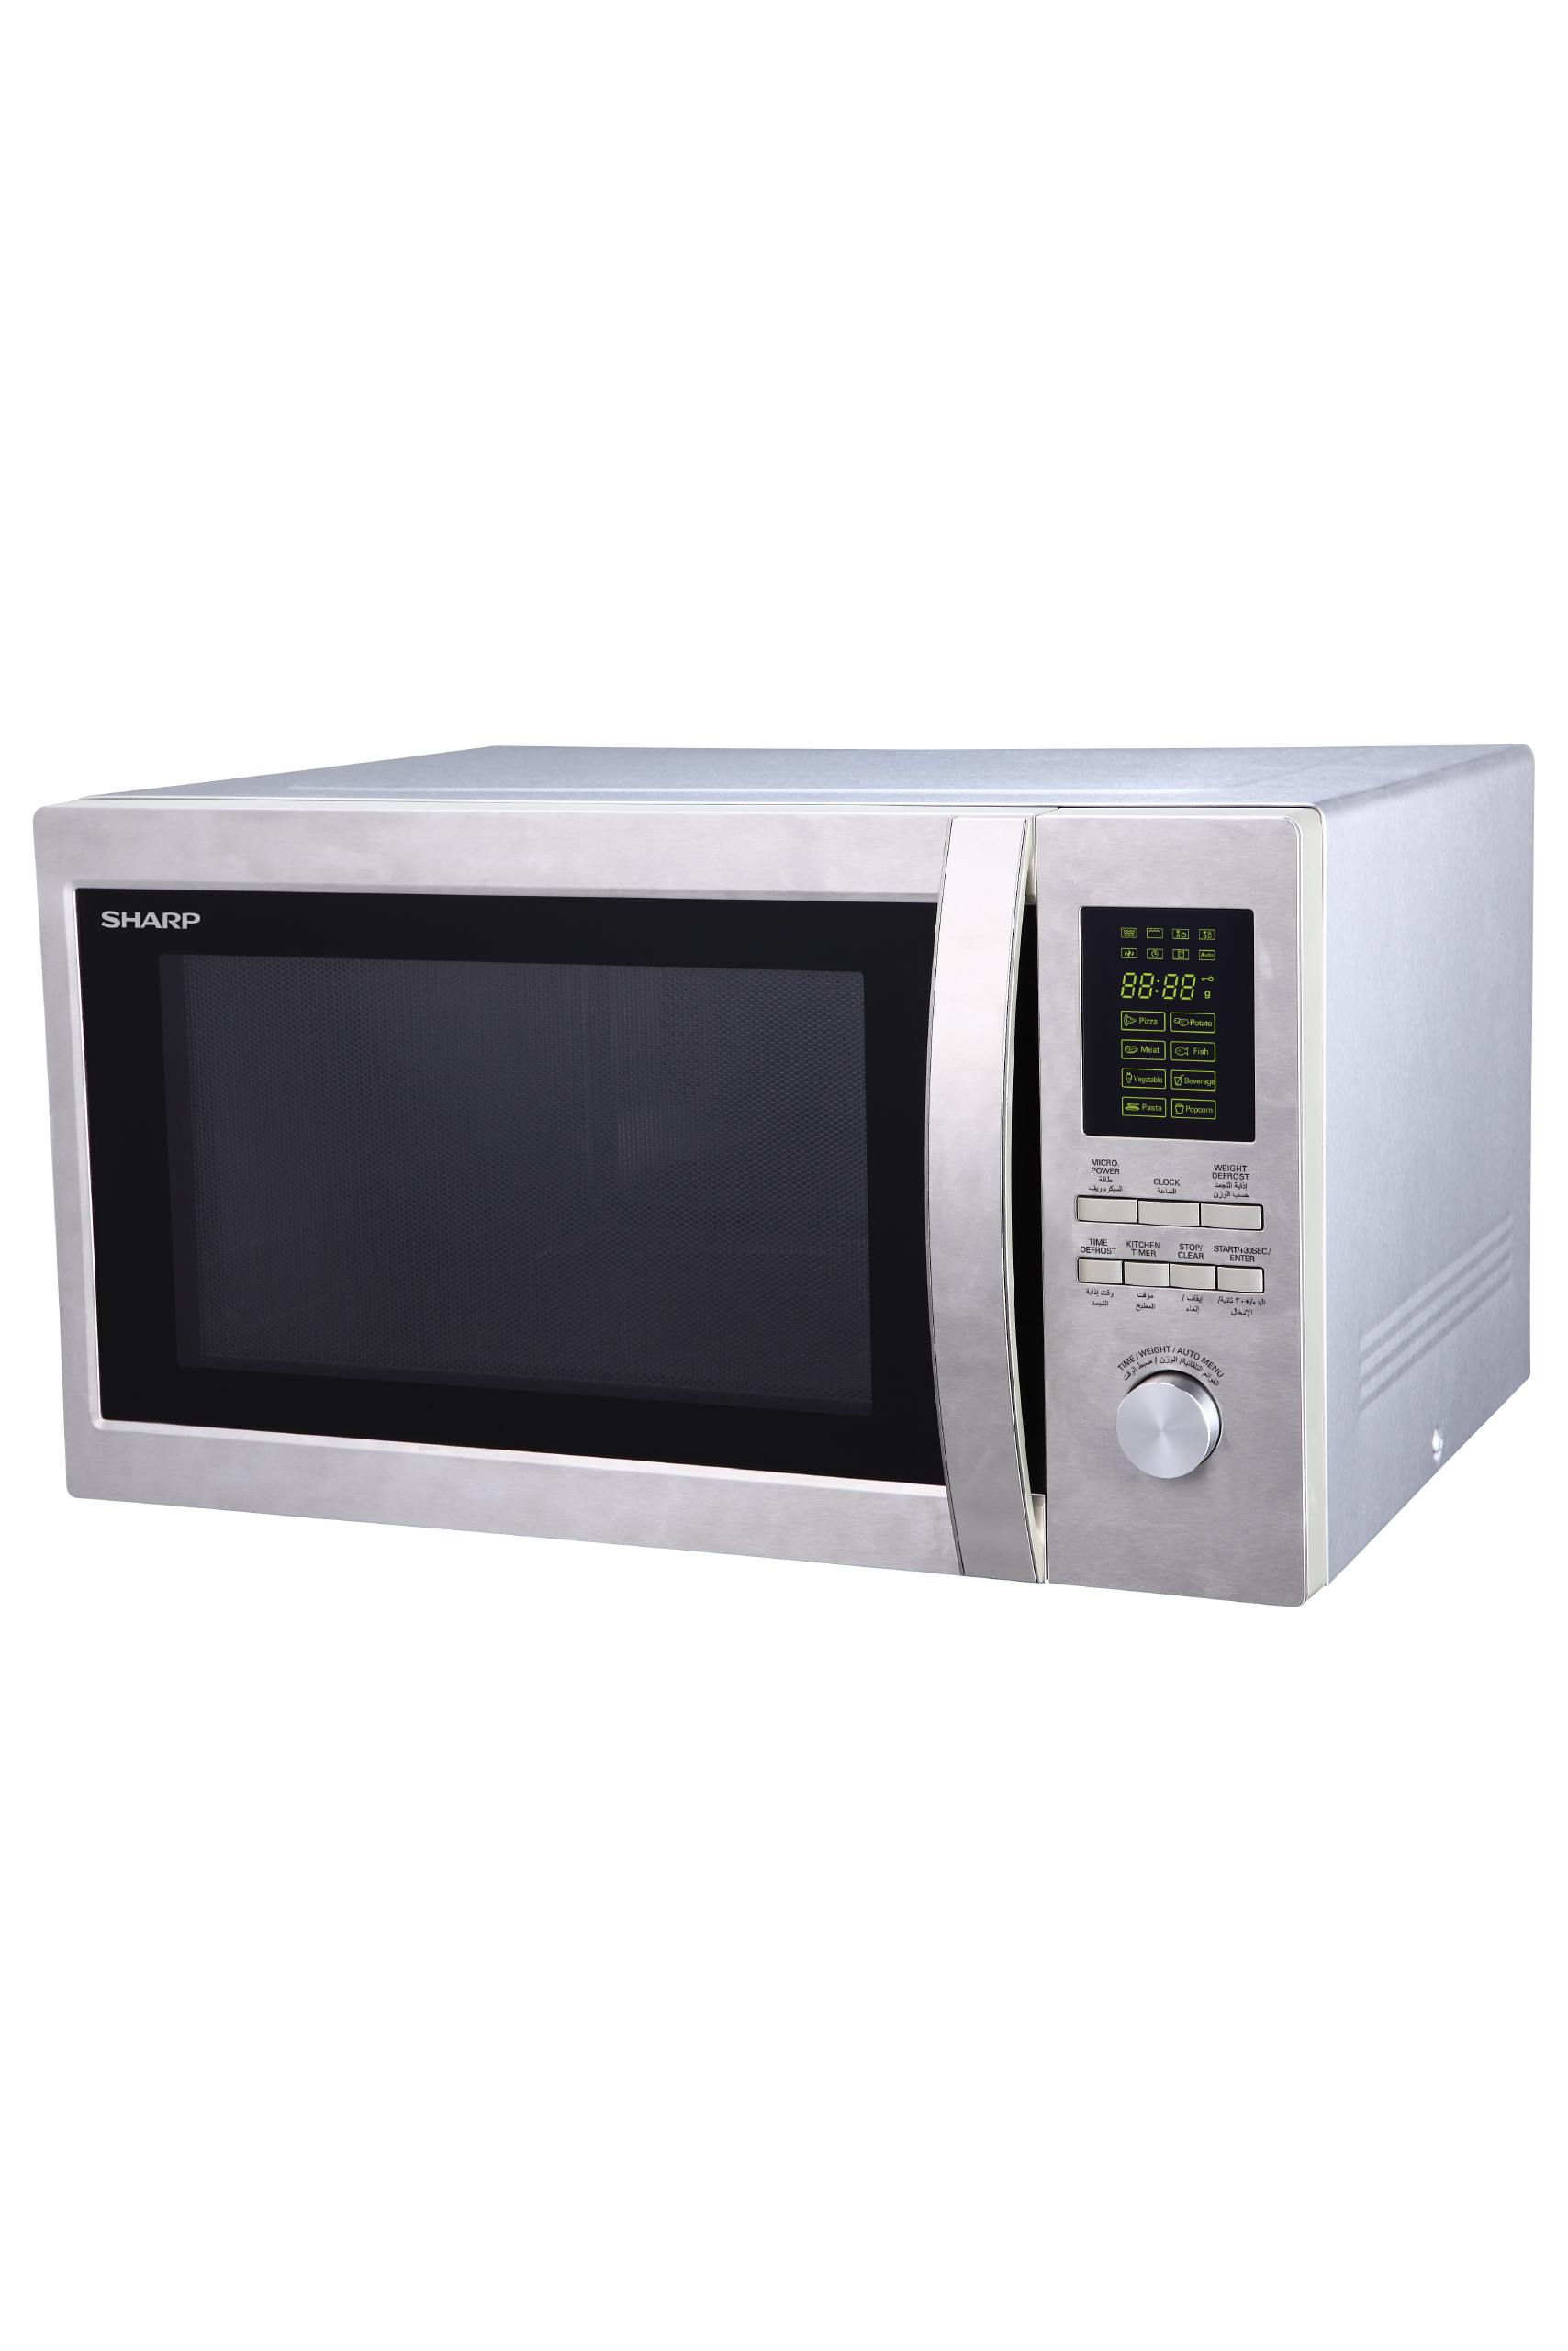 Sharp Microwave 43 Liter – Silver